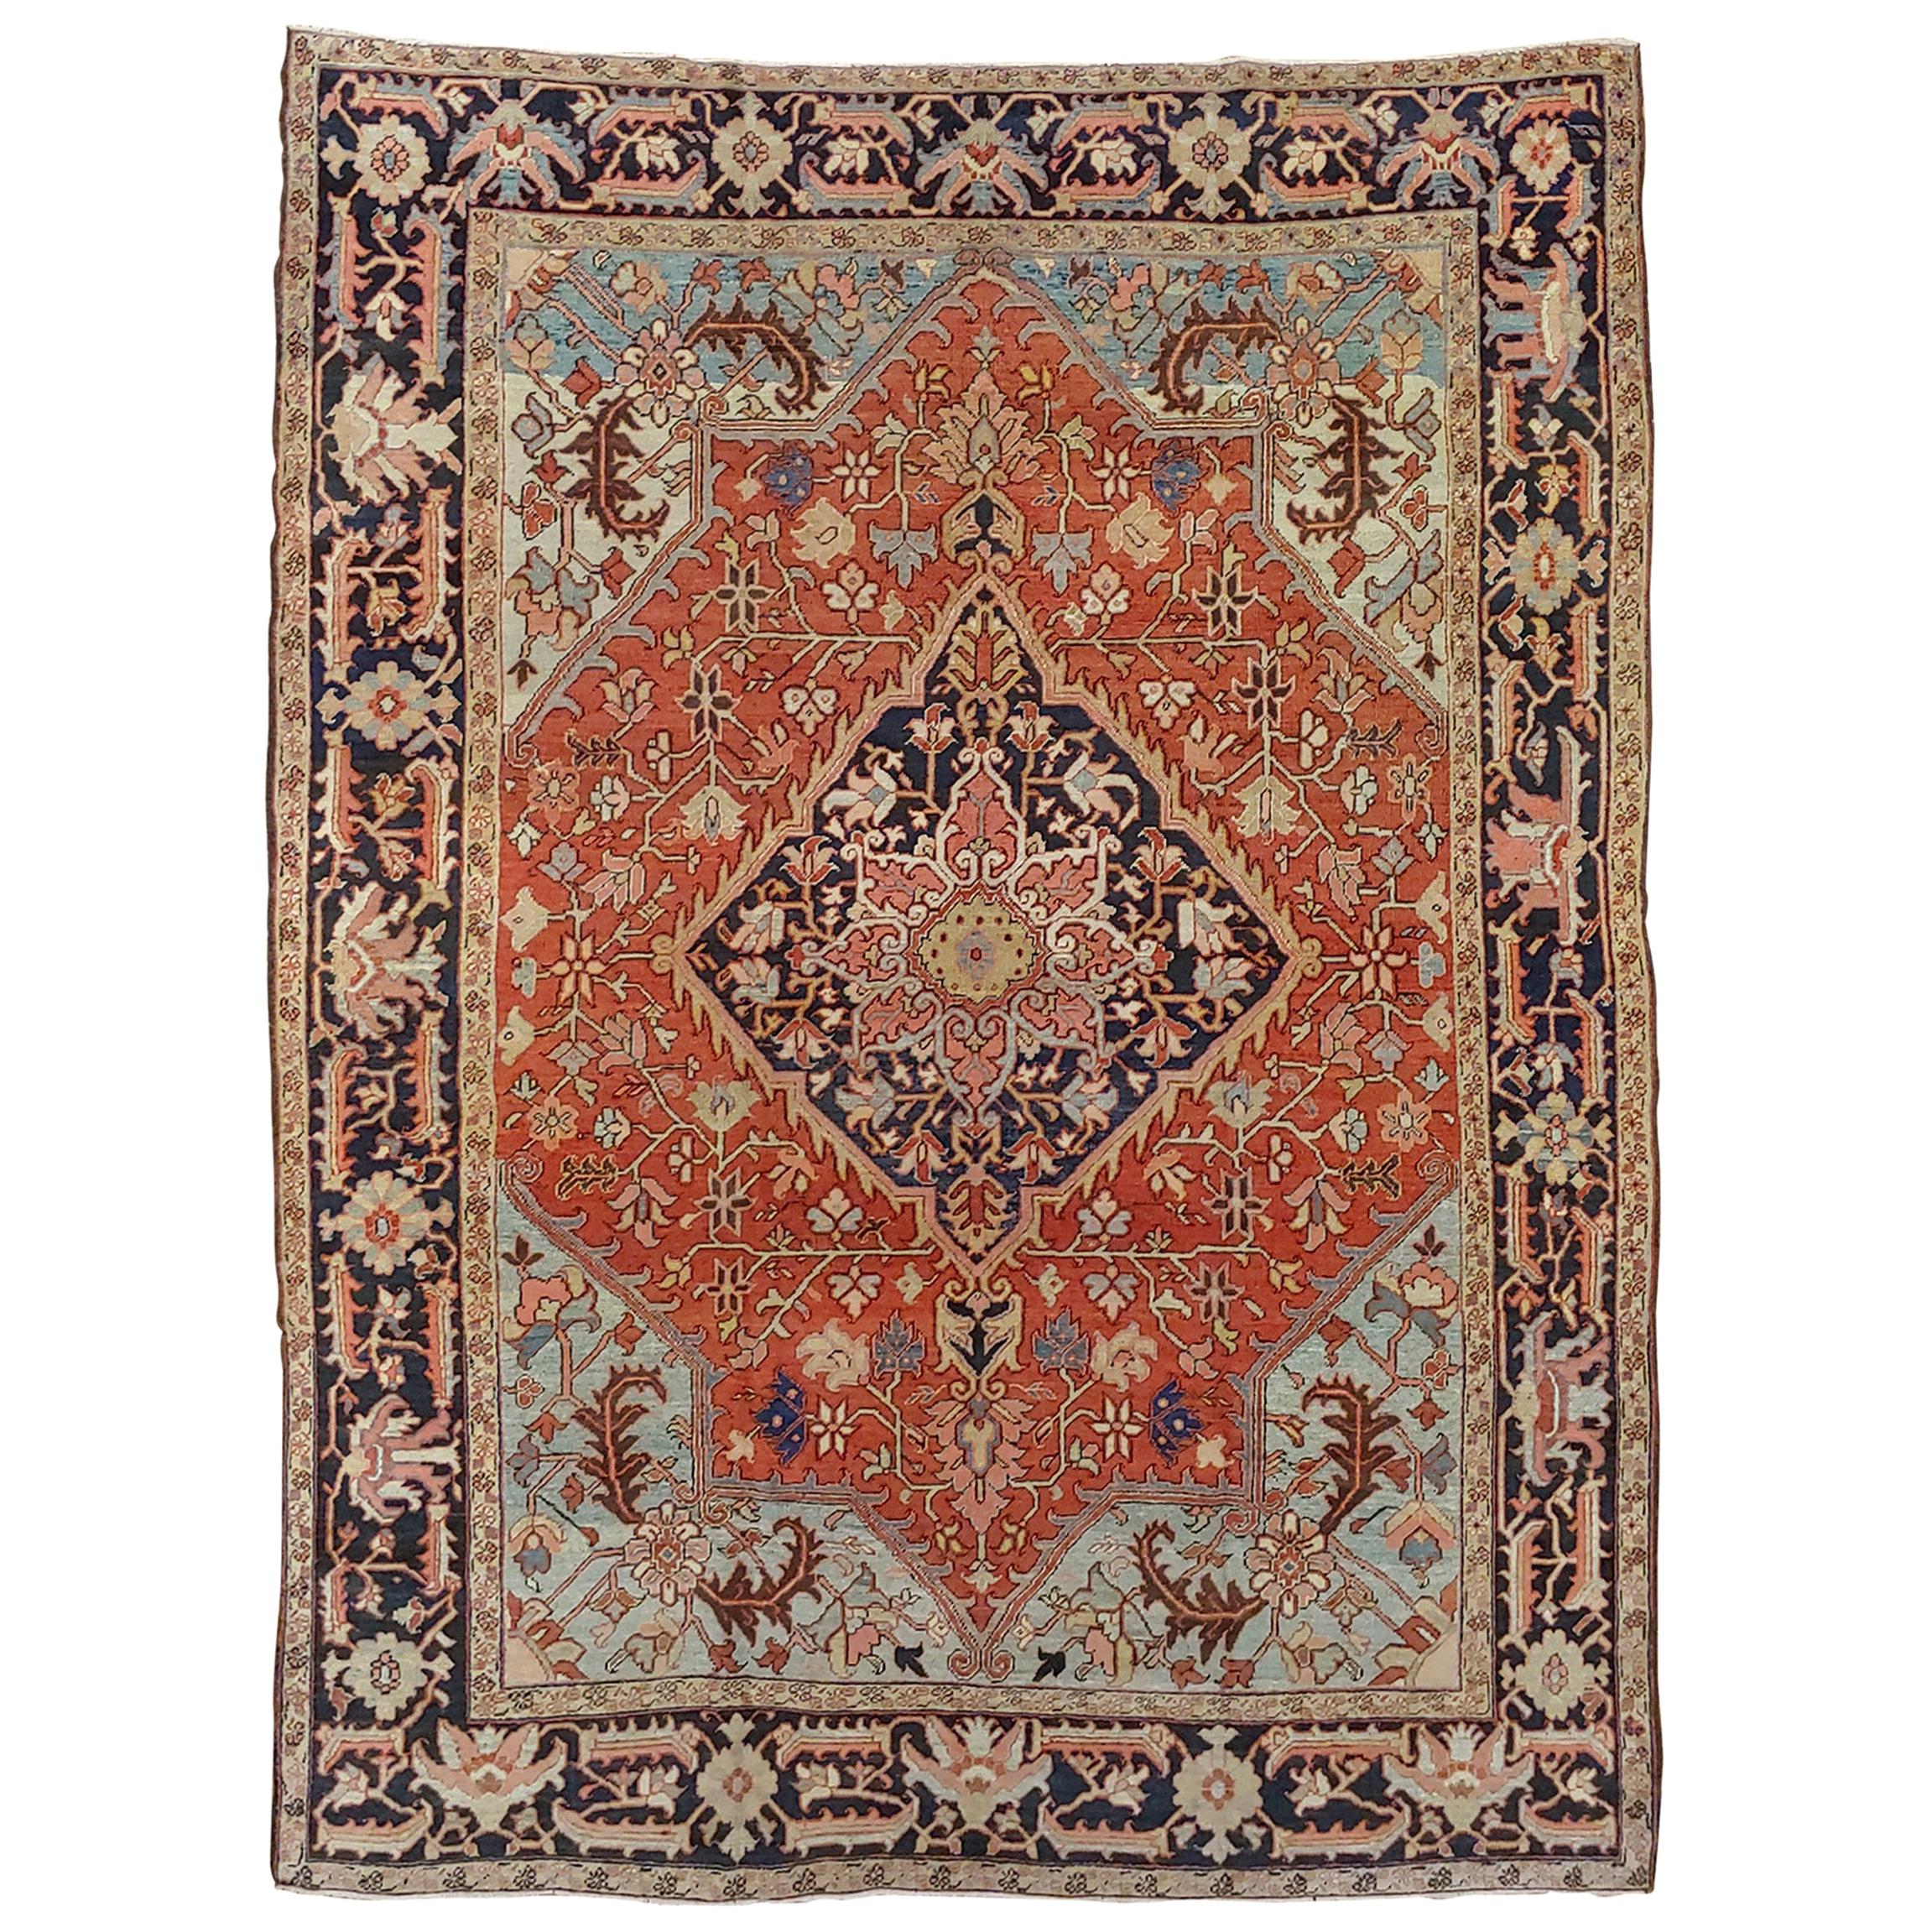 Antique Persian Heriz Rug, Rust Colored, Wool, Room Size